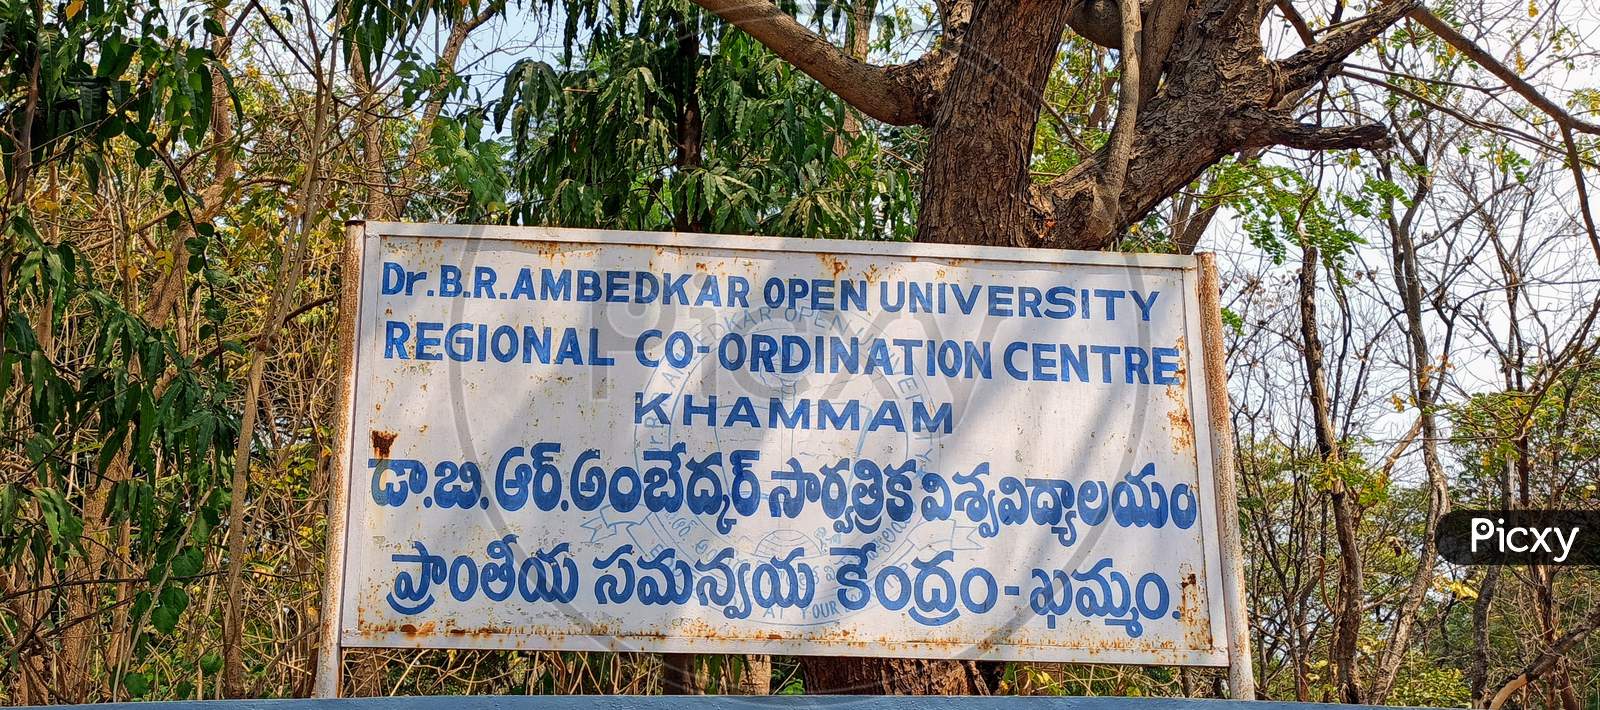 Dr B R Ambedkar Open University Regional Co- Ordination Centre Khammam